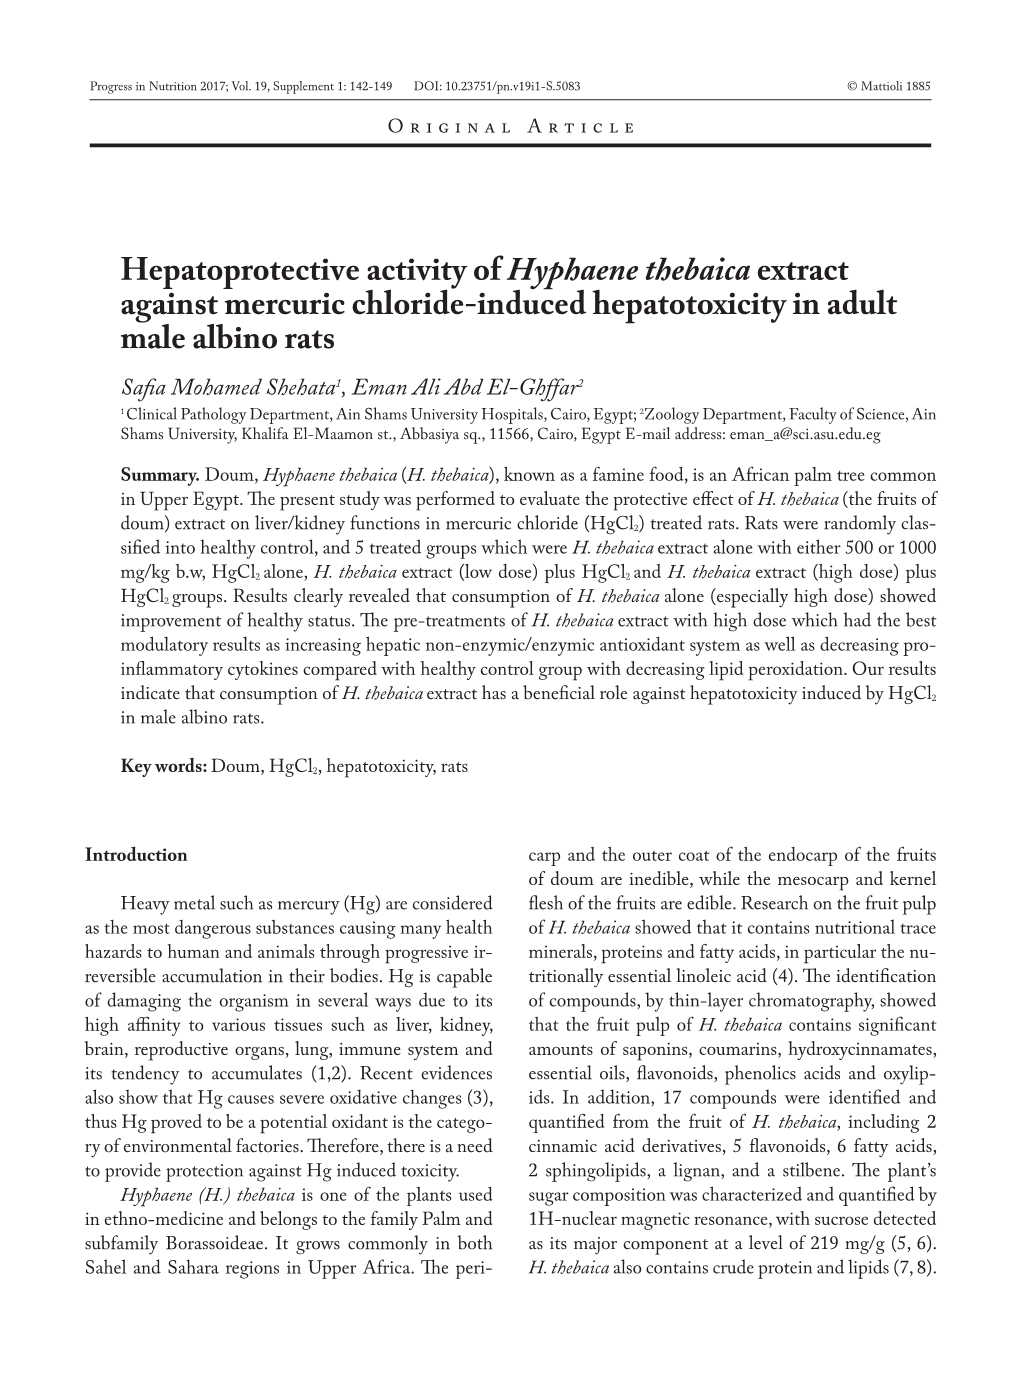 Hepatoprotective Activity of Hyphaene Thebaica Extract Against Mercuric